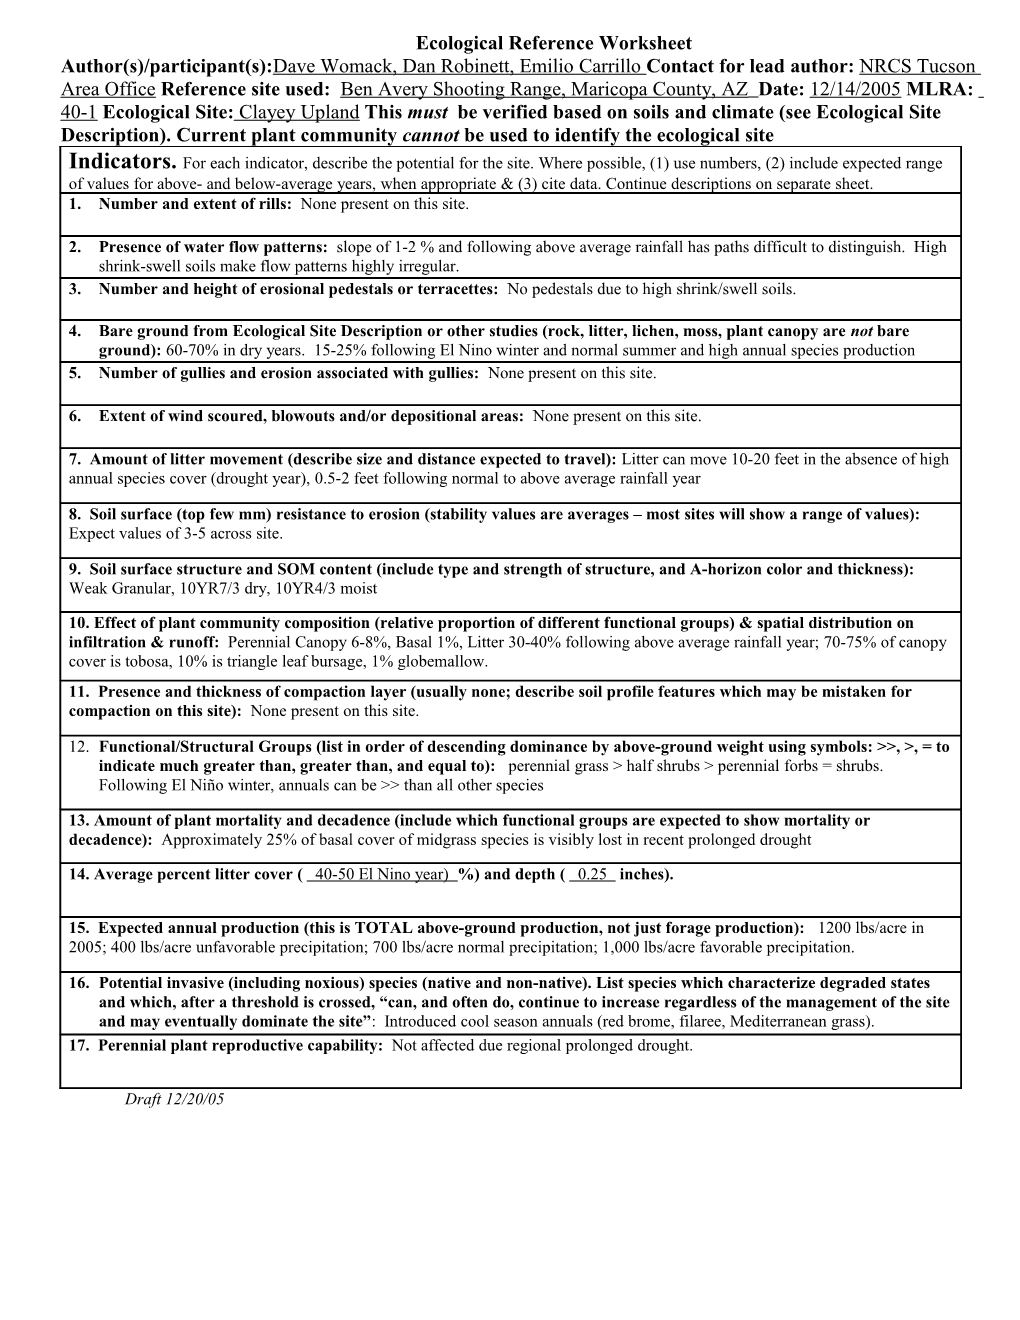 Ecological Reference Worksheet s3